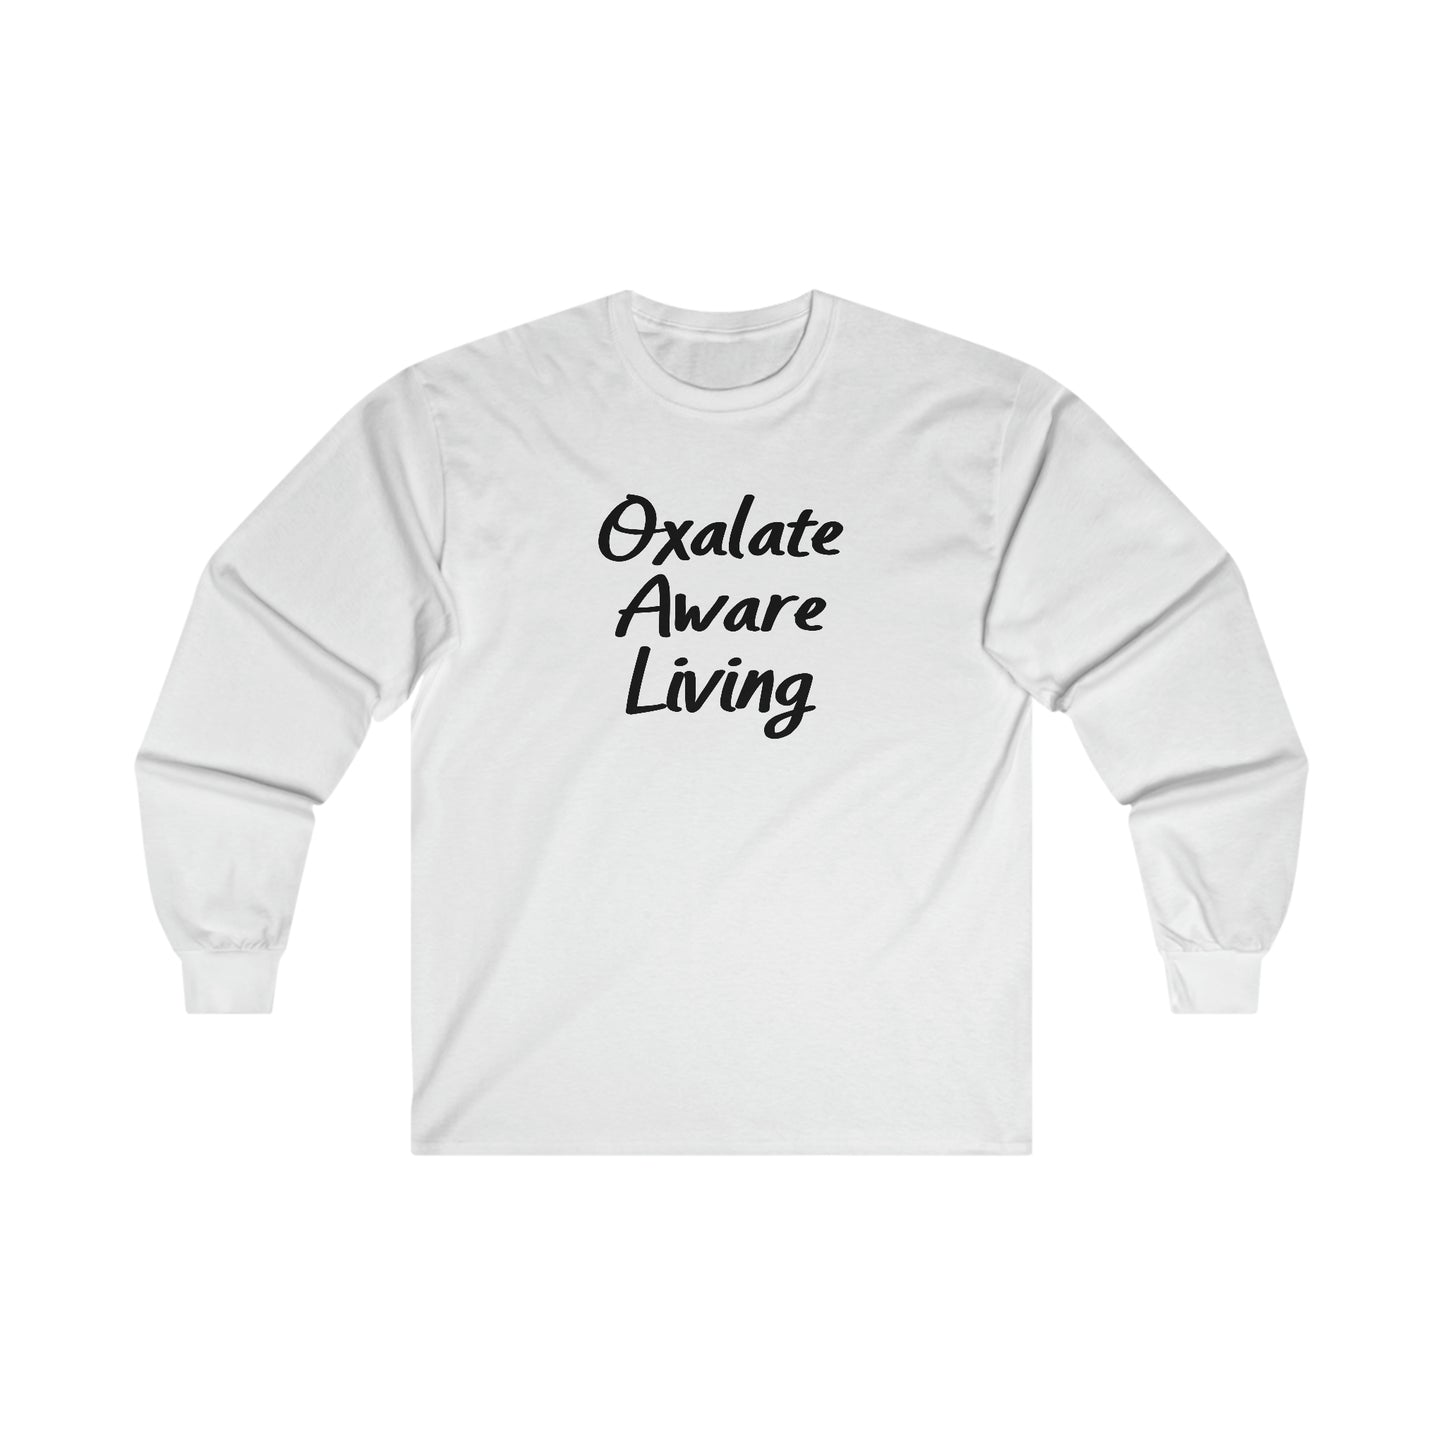 Oxalate Aware Living Long Sleeve Tee Ultra Cotton